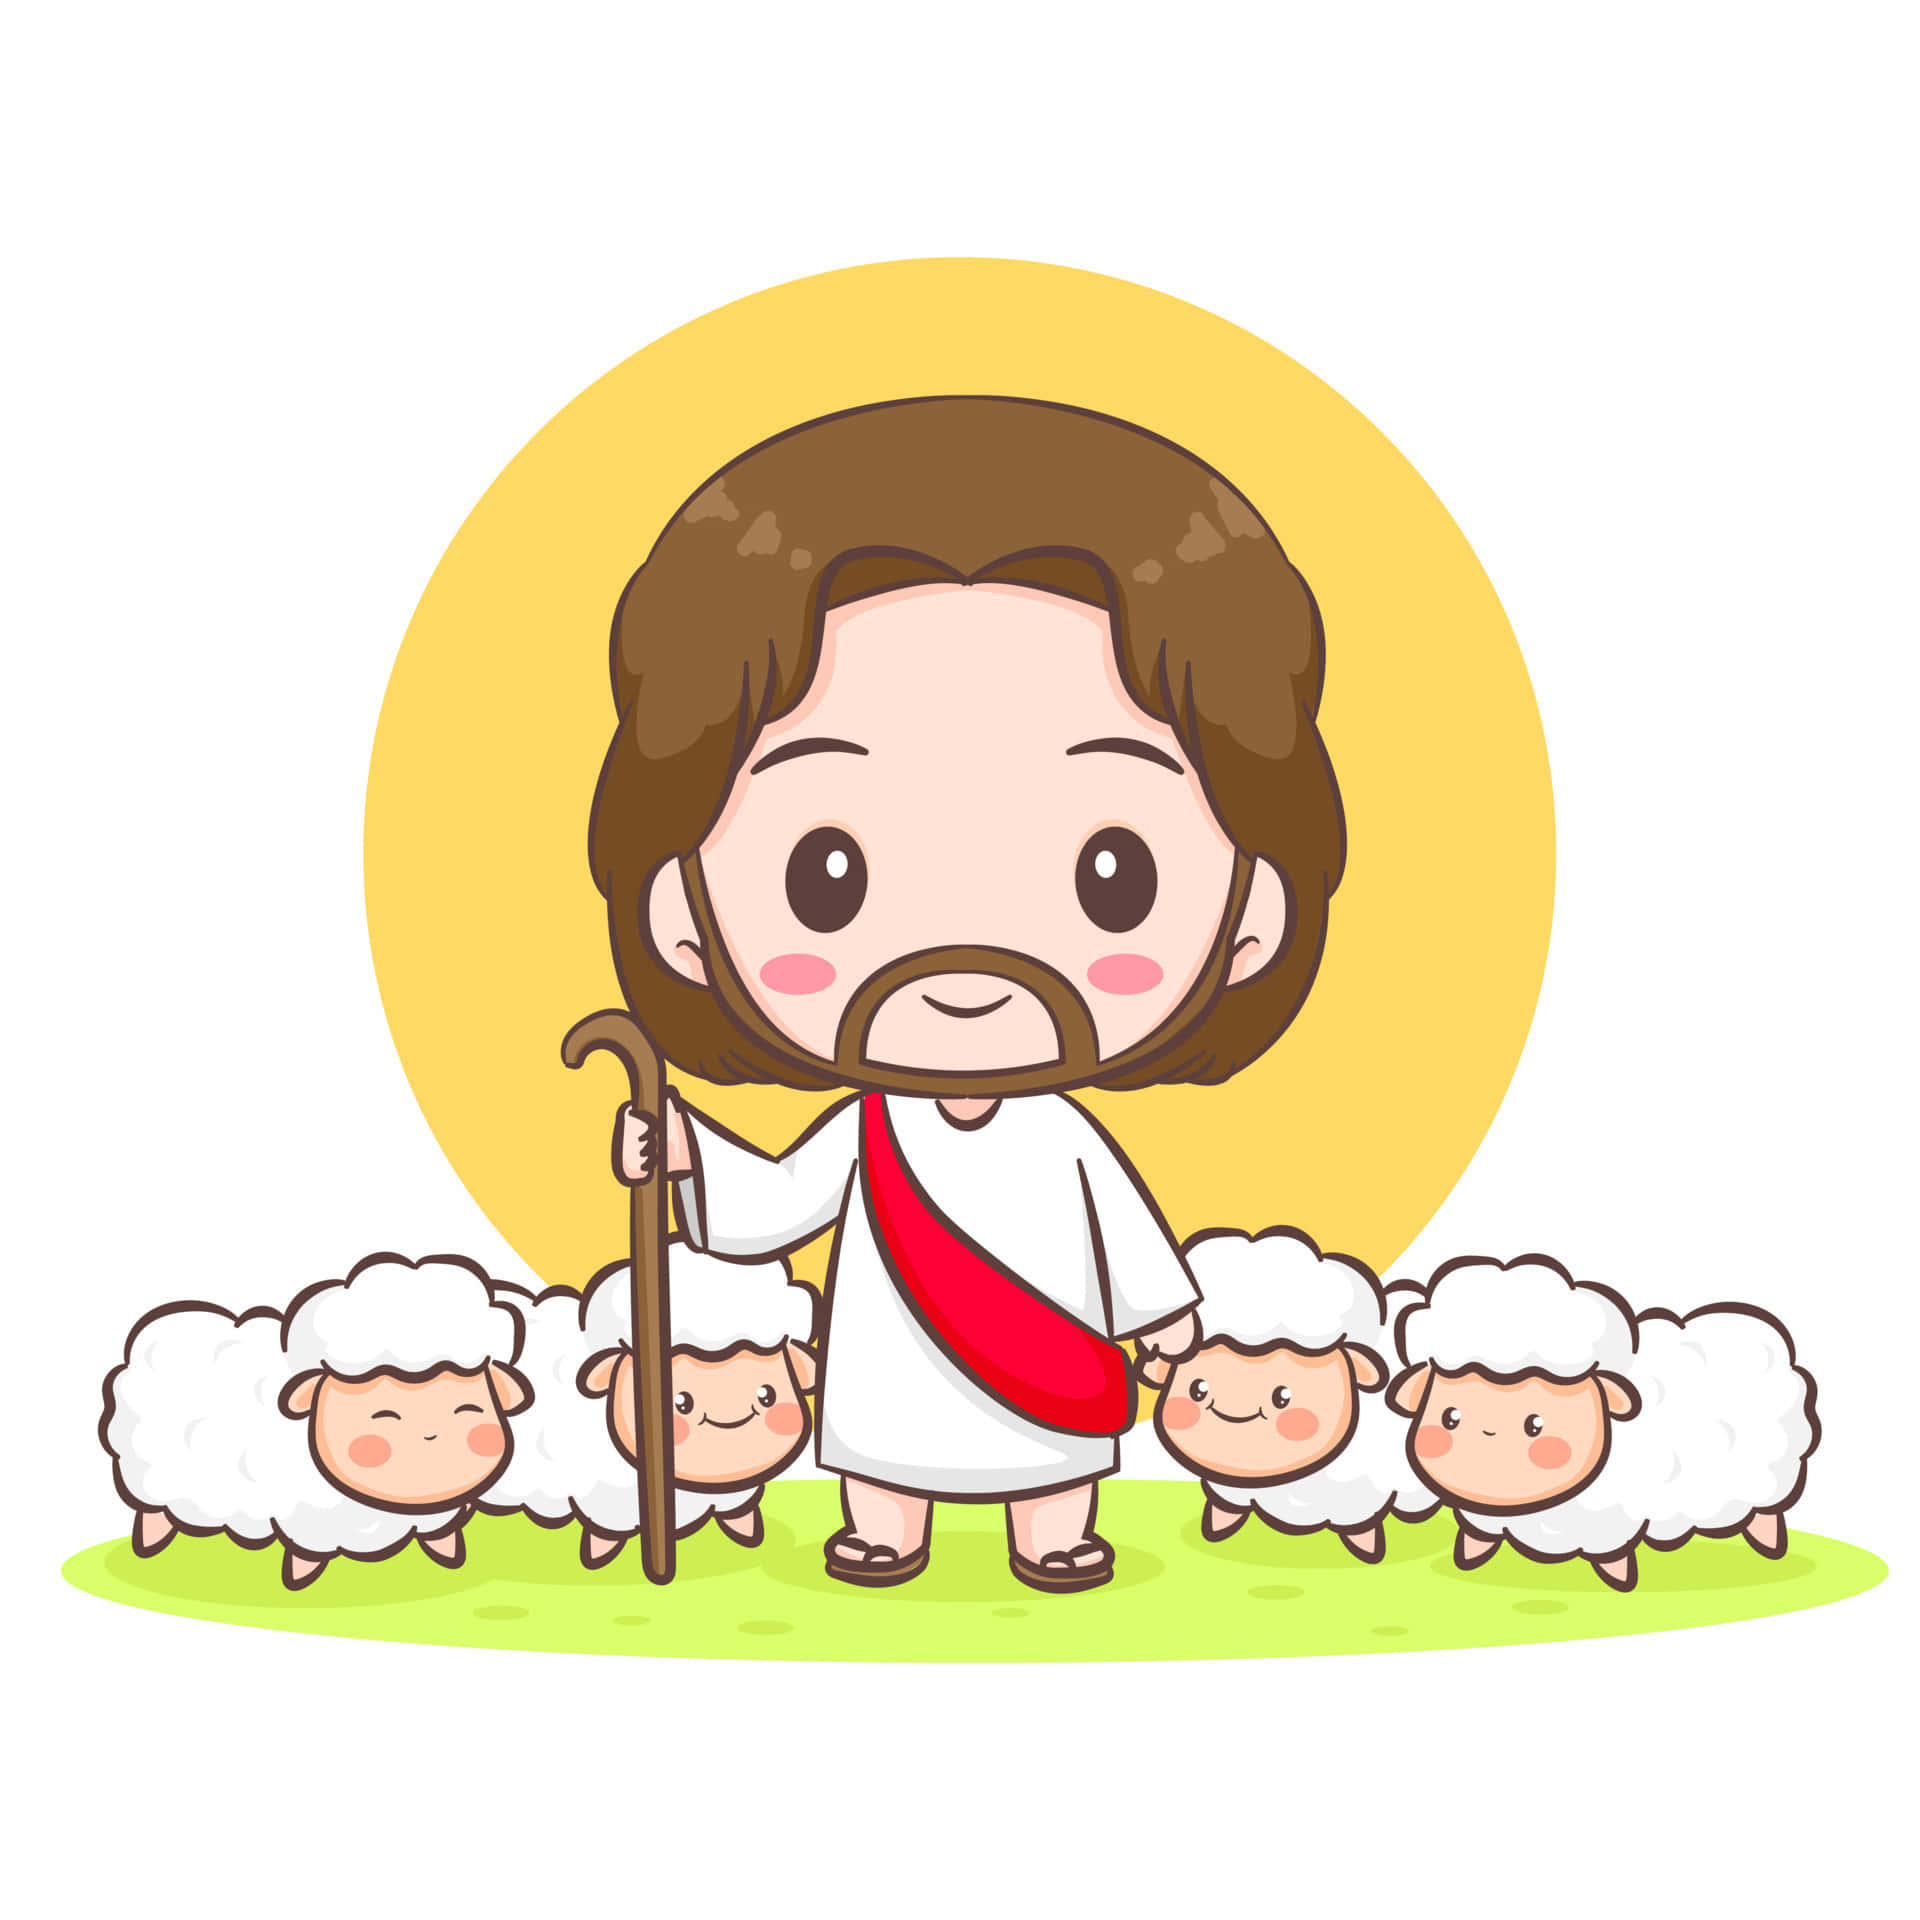 Jesus Christ, the Good Shepherd, lovingly tending to his sheep Wallpaper